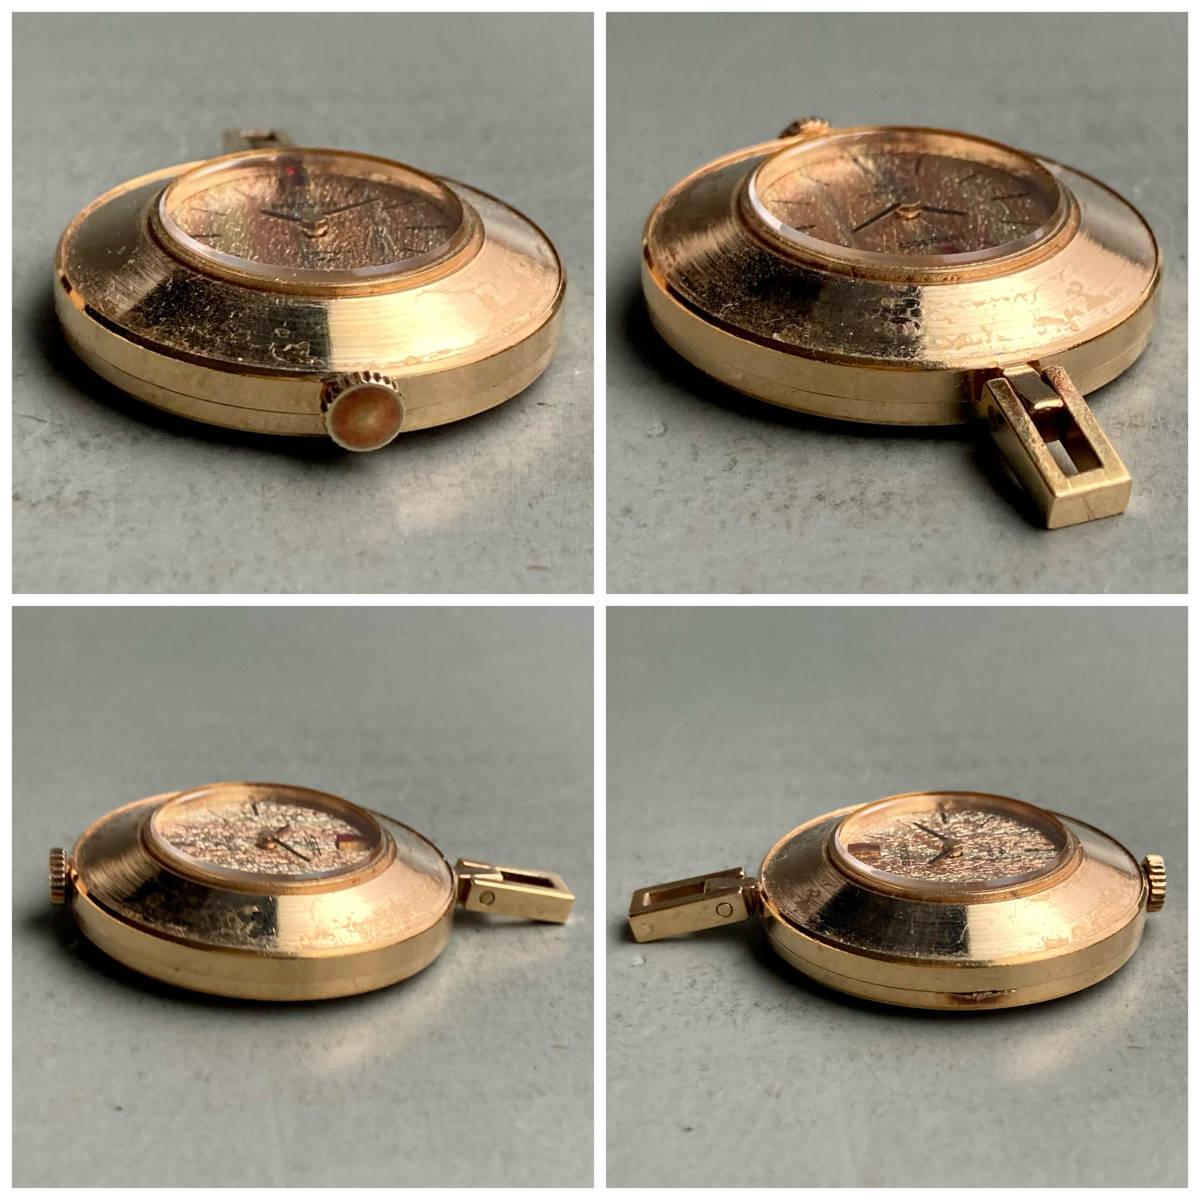 Seiko Pocket Watch Pendant Watch Antique Vintage Pocket Watch Gold Ladies - Murphy Johnson Watches Co.